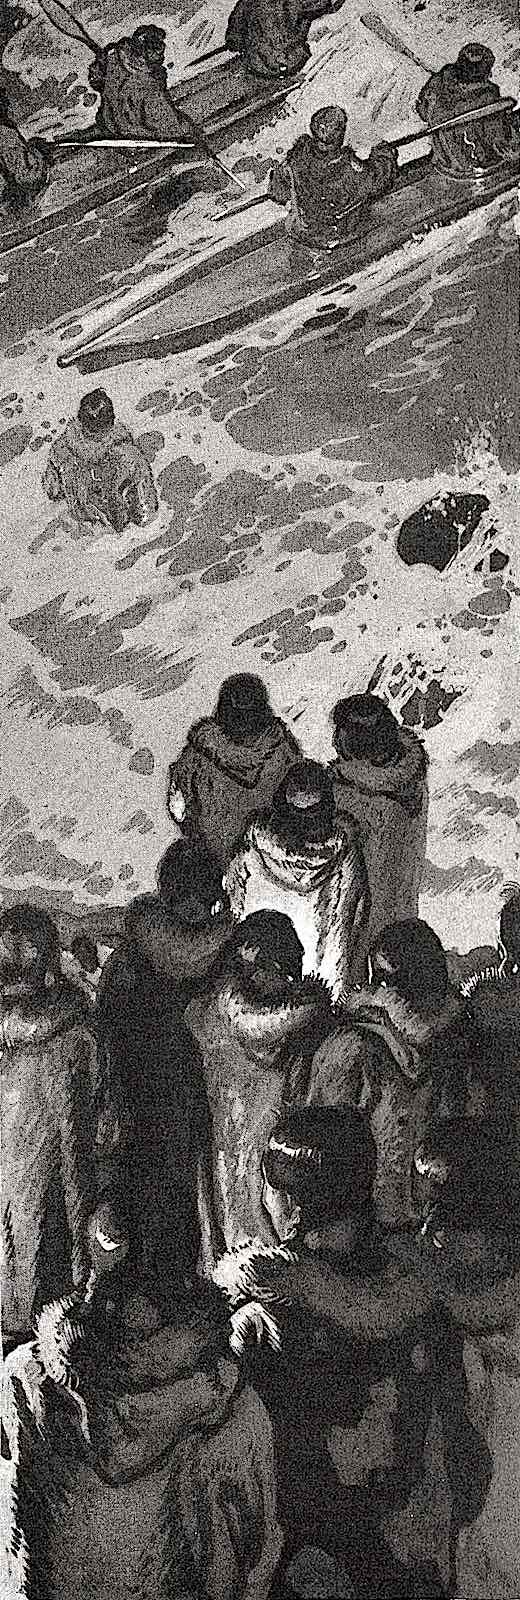 a Harold Von Schmidt illustration of Innuit people, a birdseye view